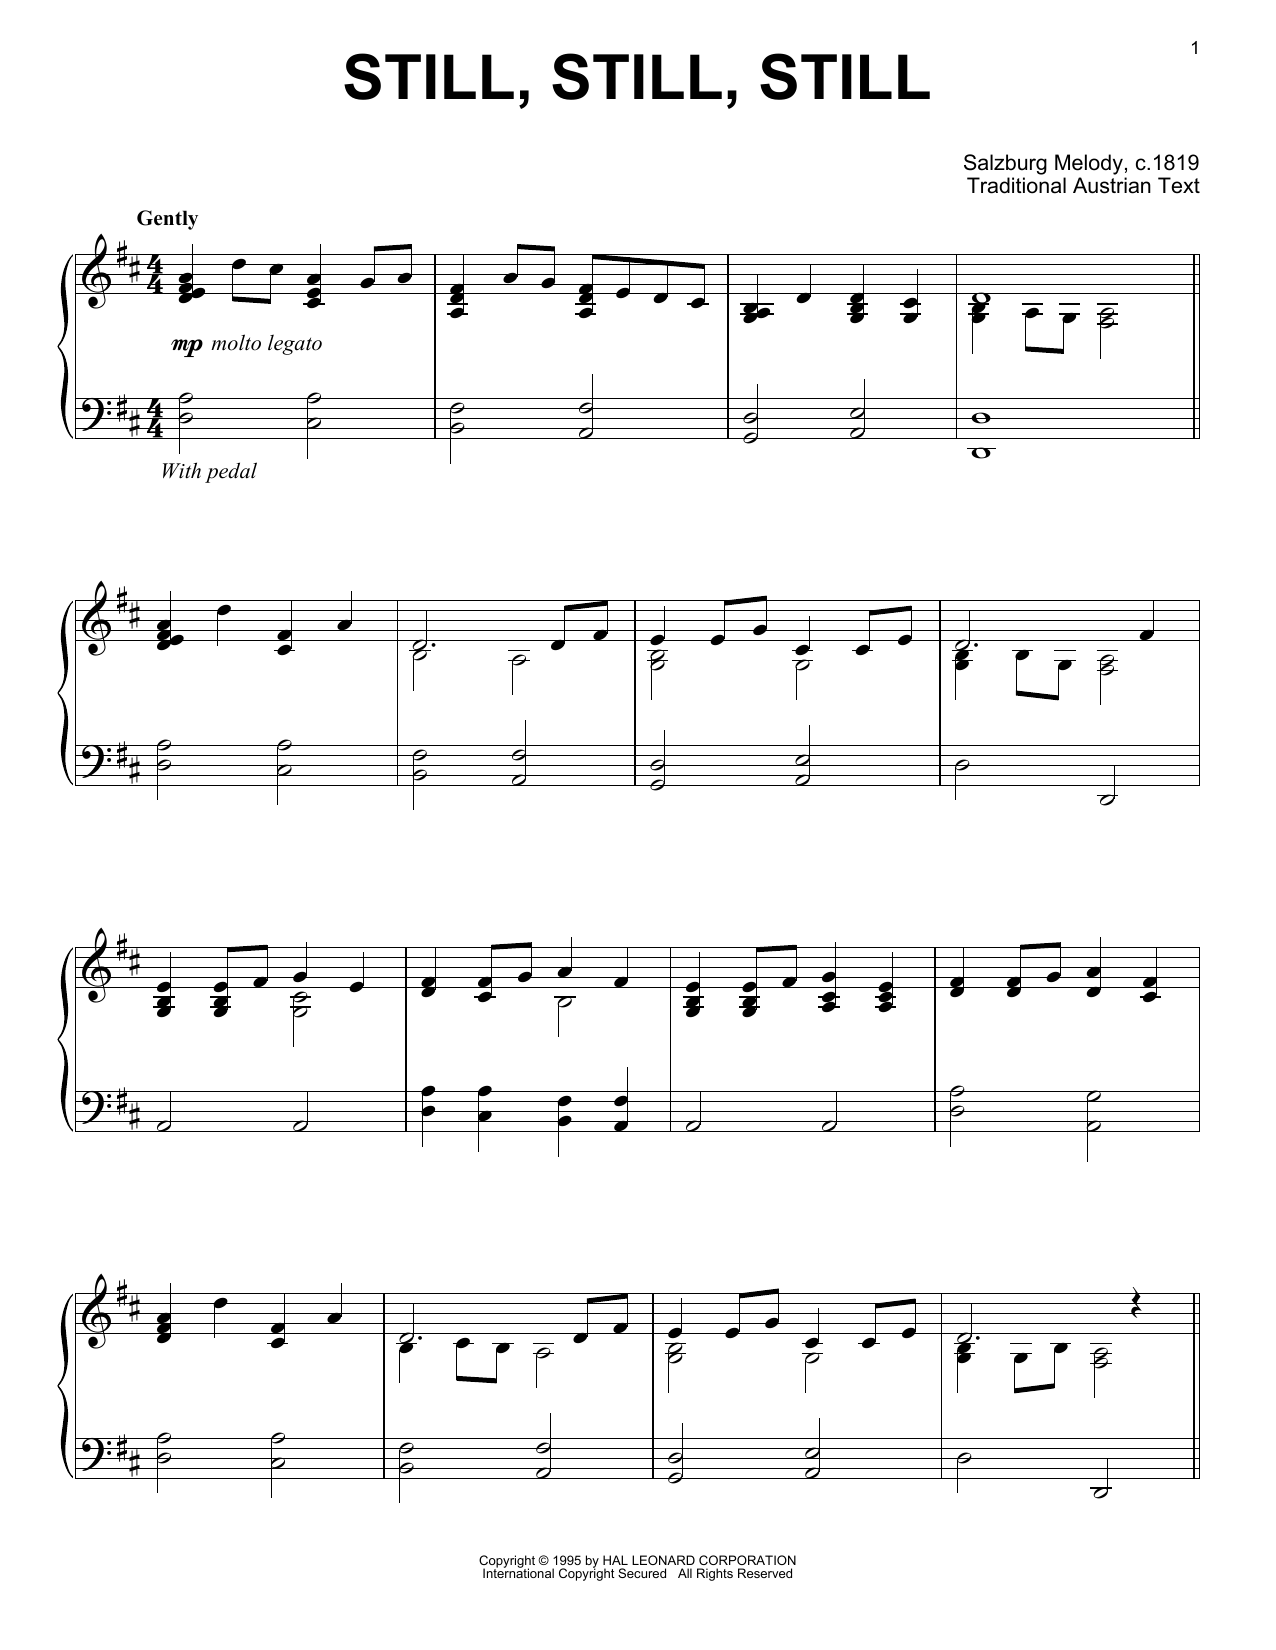 Traditional Austrian Text Still, Still, Still sheet music notes and chords arranged for Piano Solo